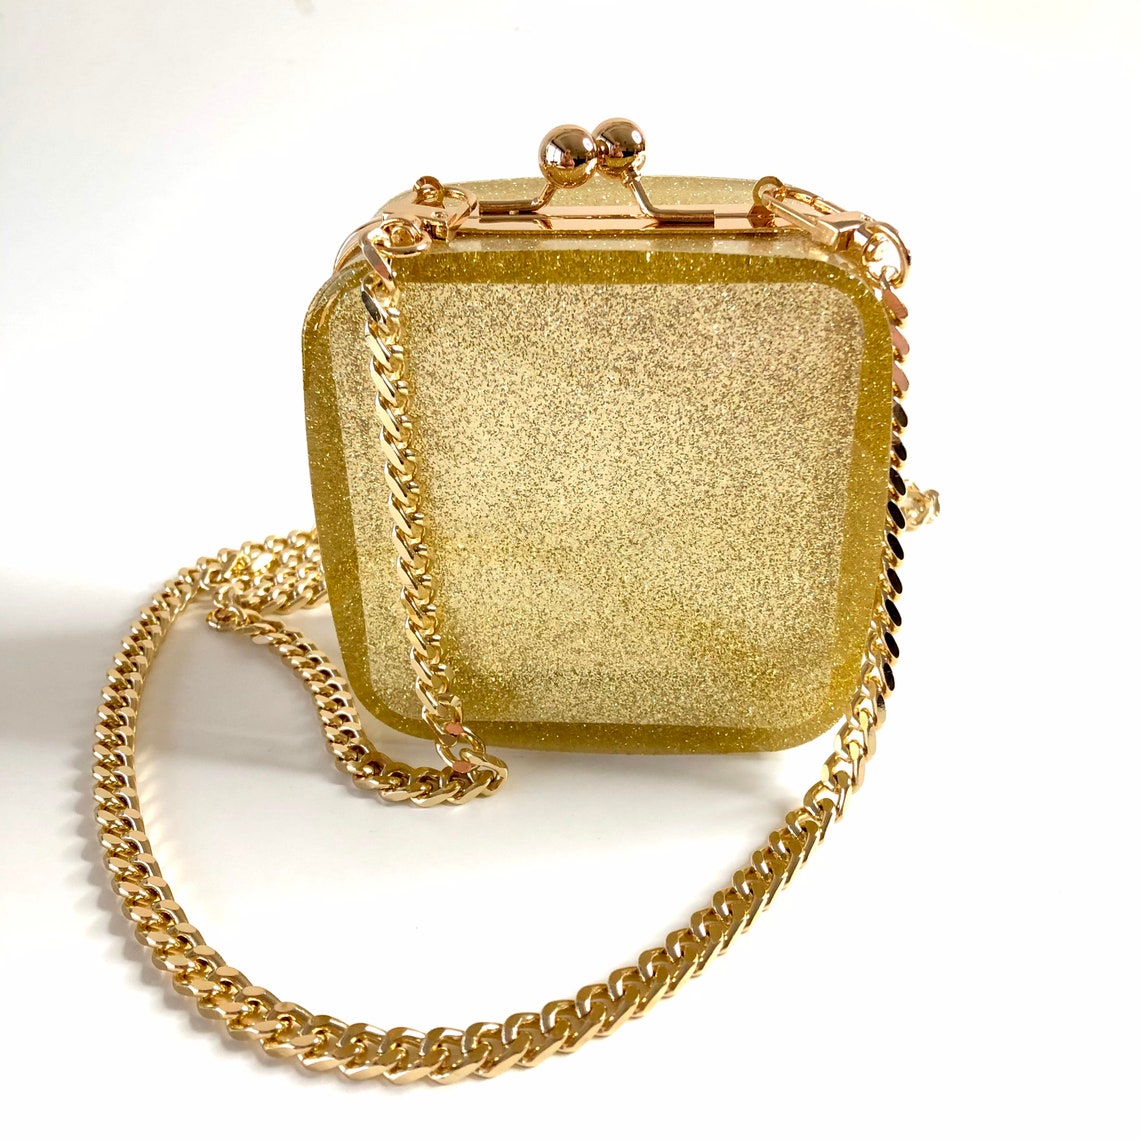 Gold Resin Chain Bag | Etsy